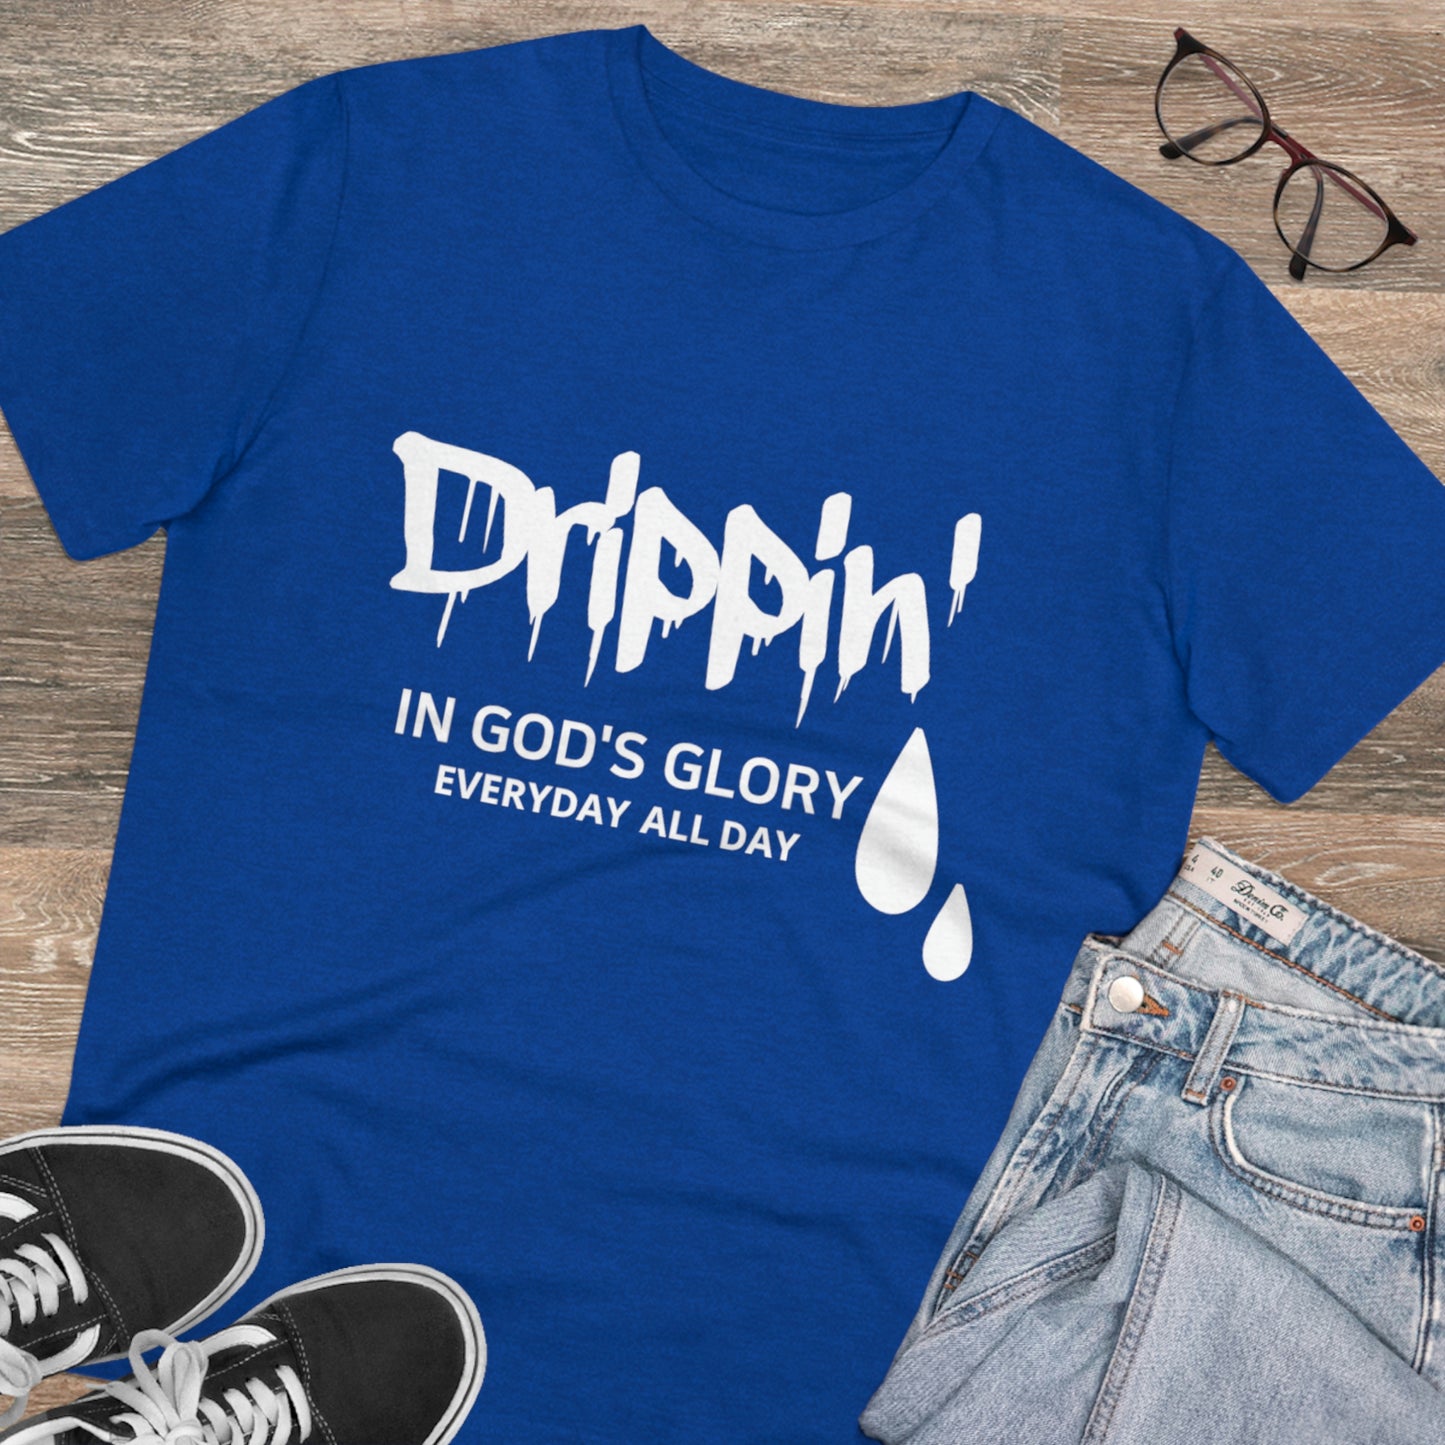 Drippin' in God's Glory